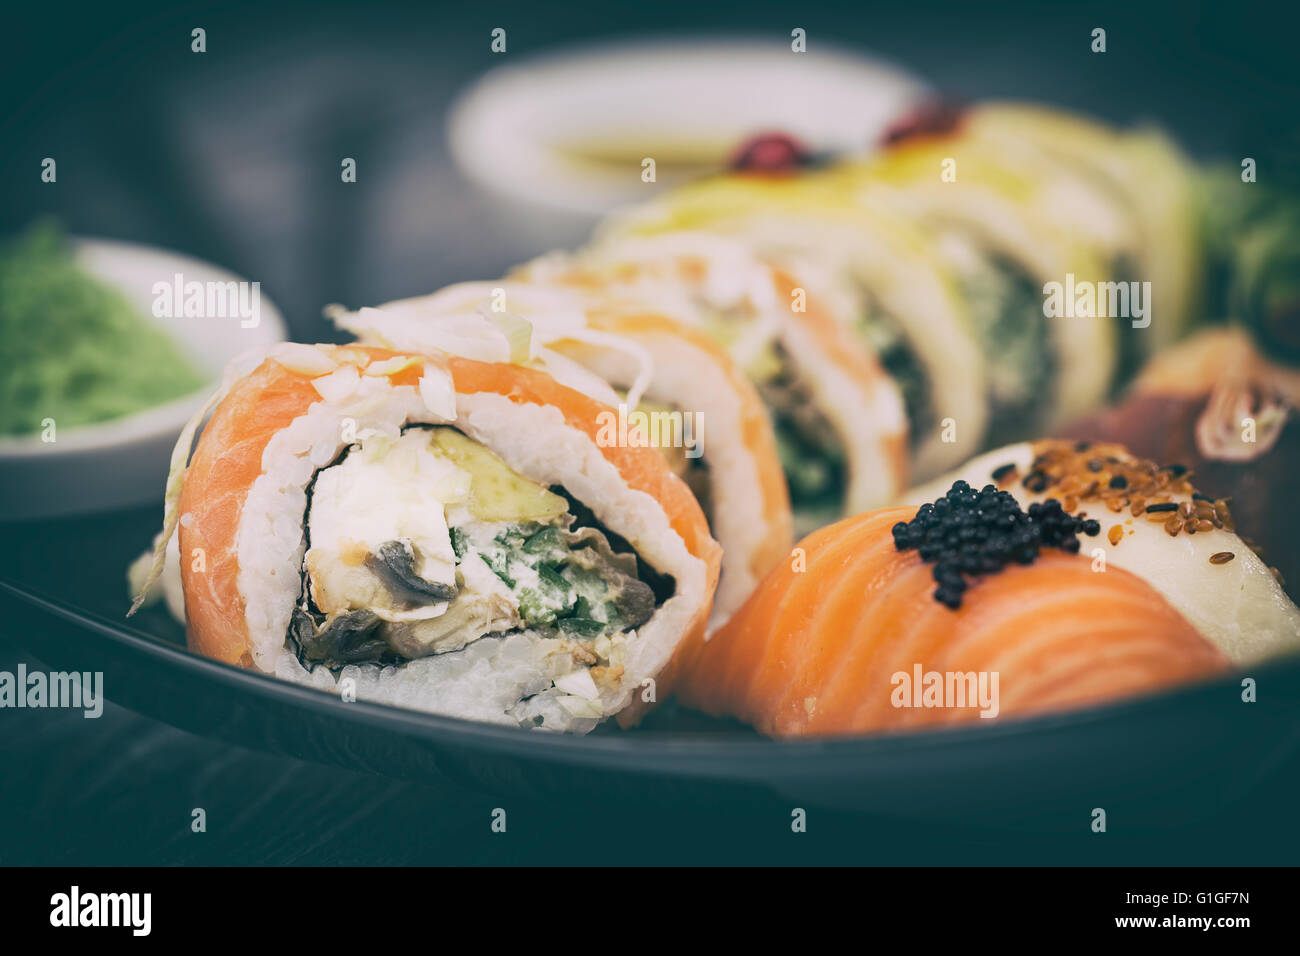 Sushi Roll materias makki alimentos frescos mariscos susi - stock image Foto de stock